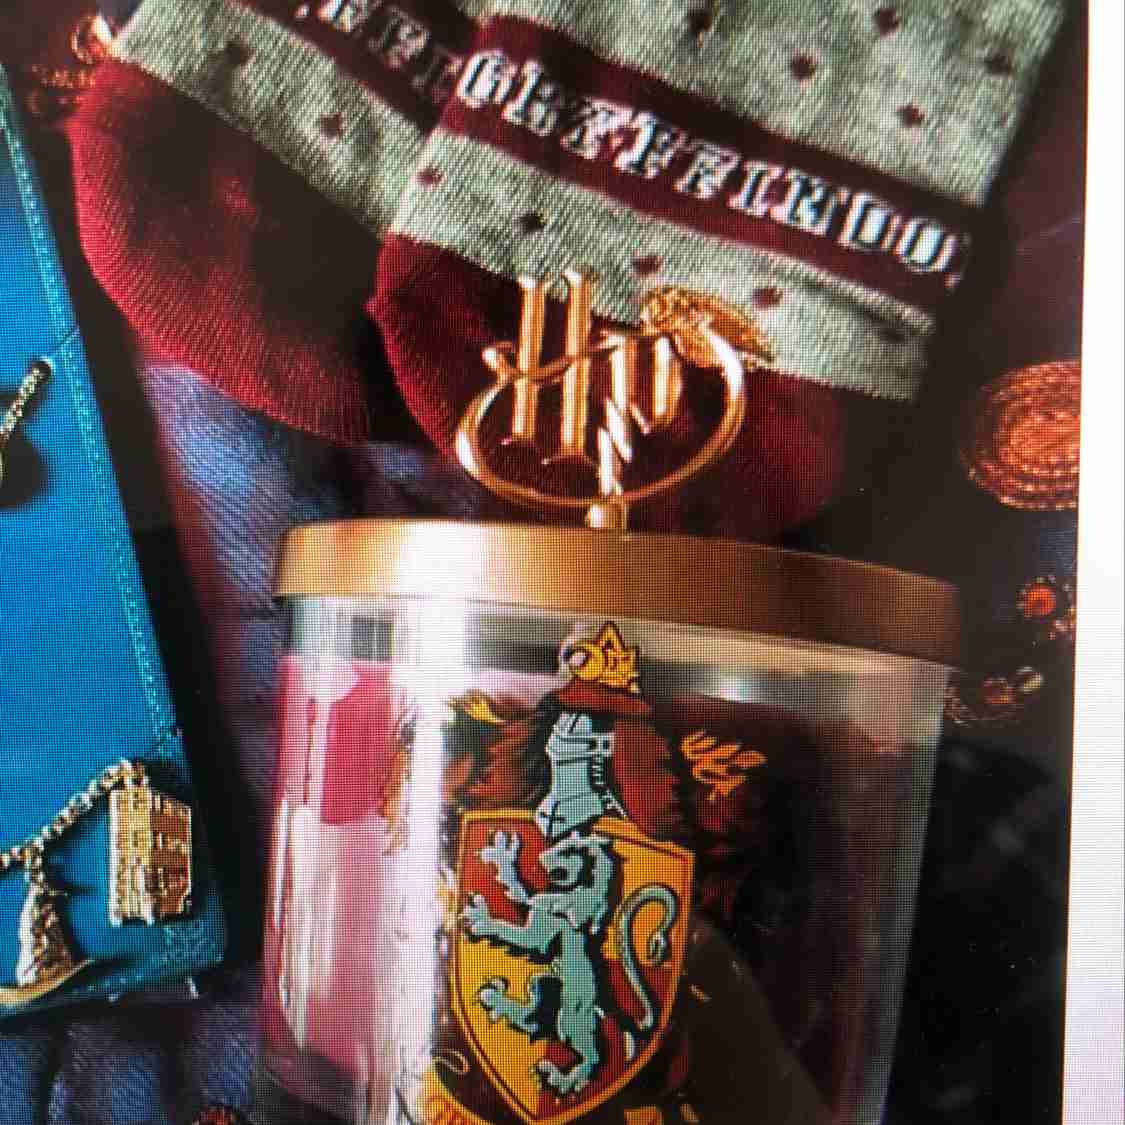 Gryffindor candle